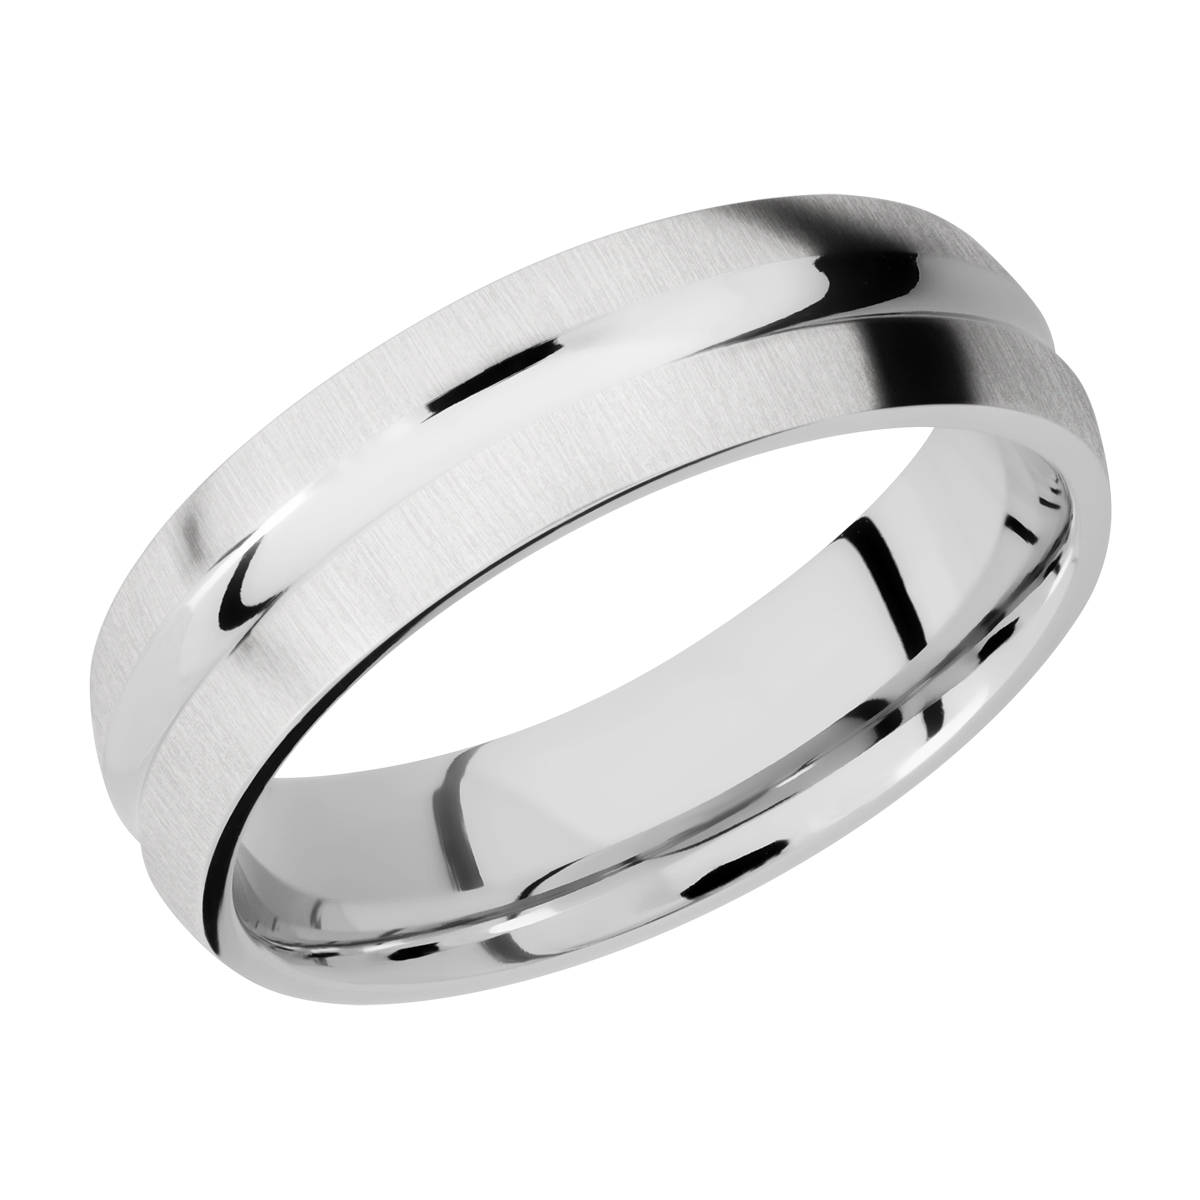 Lashbrook CC6DC Cobalt Chrome Wedding Ring or Band